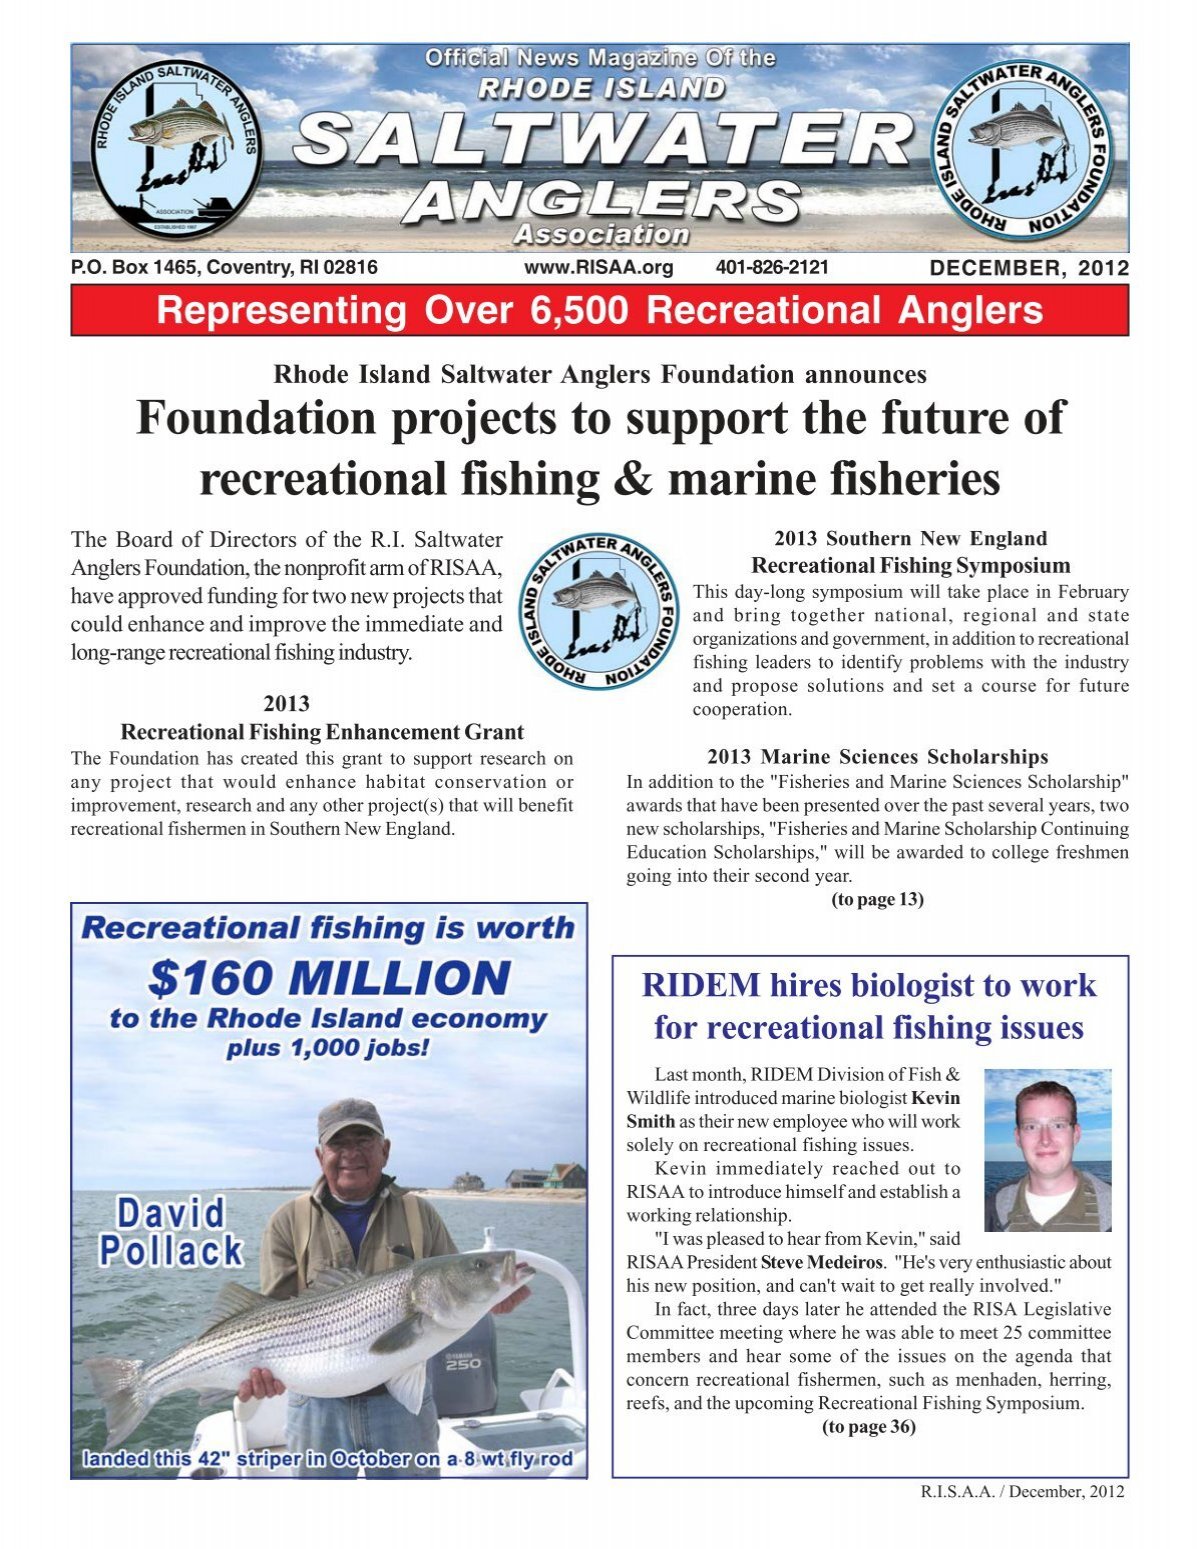 December, 2012 - The Rhode Island Saltwater Anglers Association